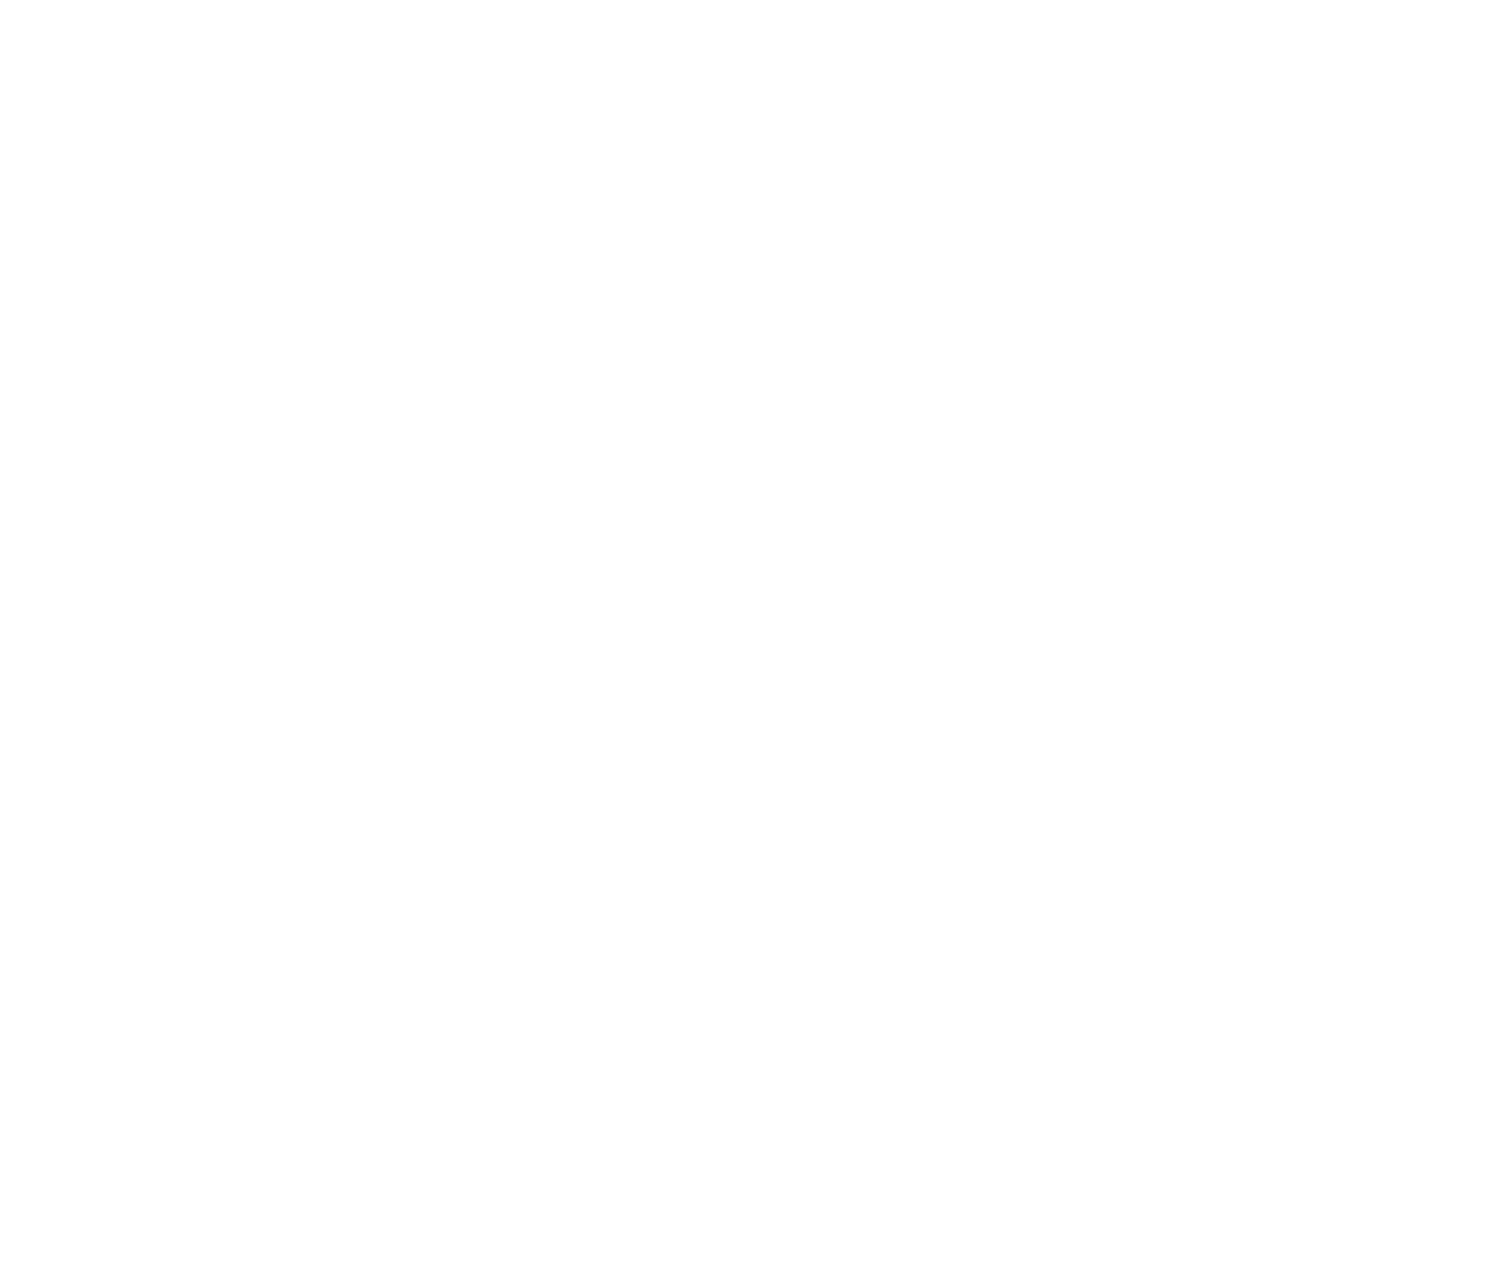 Suncoast Kids Place